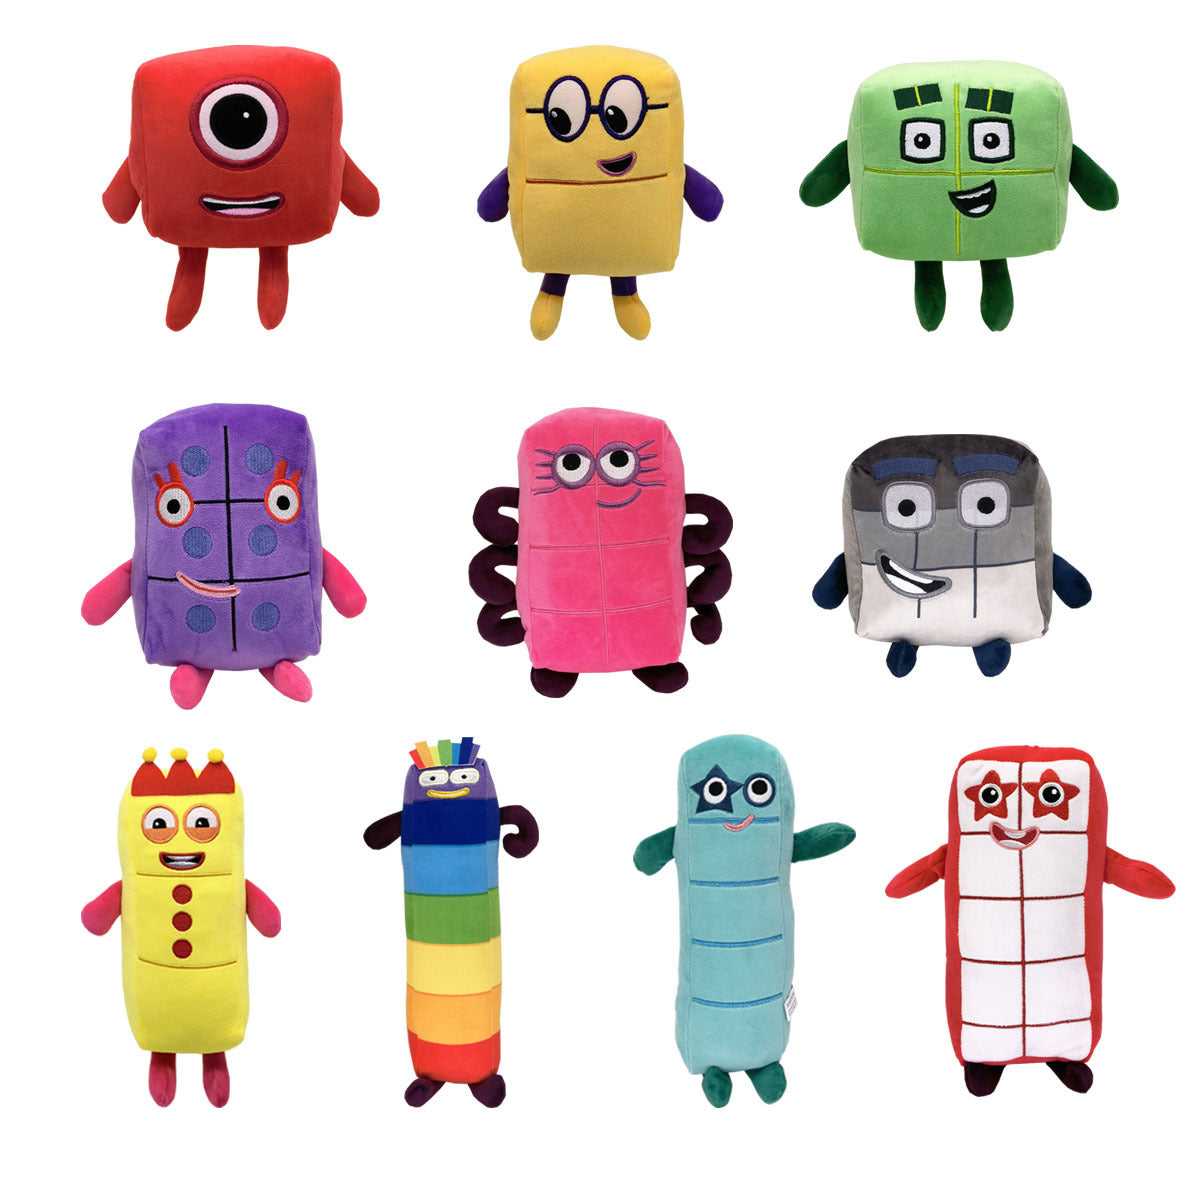 Number Blocks Plush Toys Set 1-10 Plush,10pcs Enlightenment Plush Toy for Boys and Girls